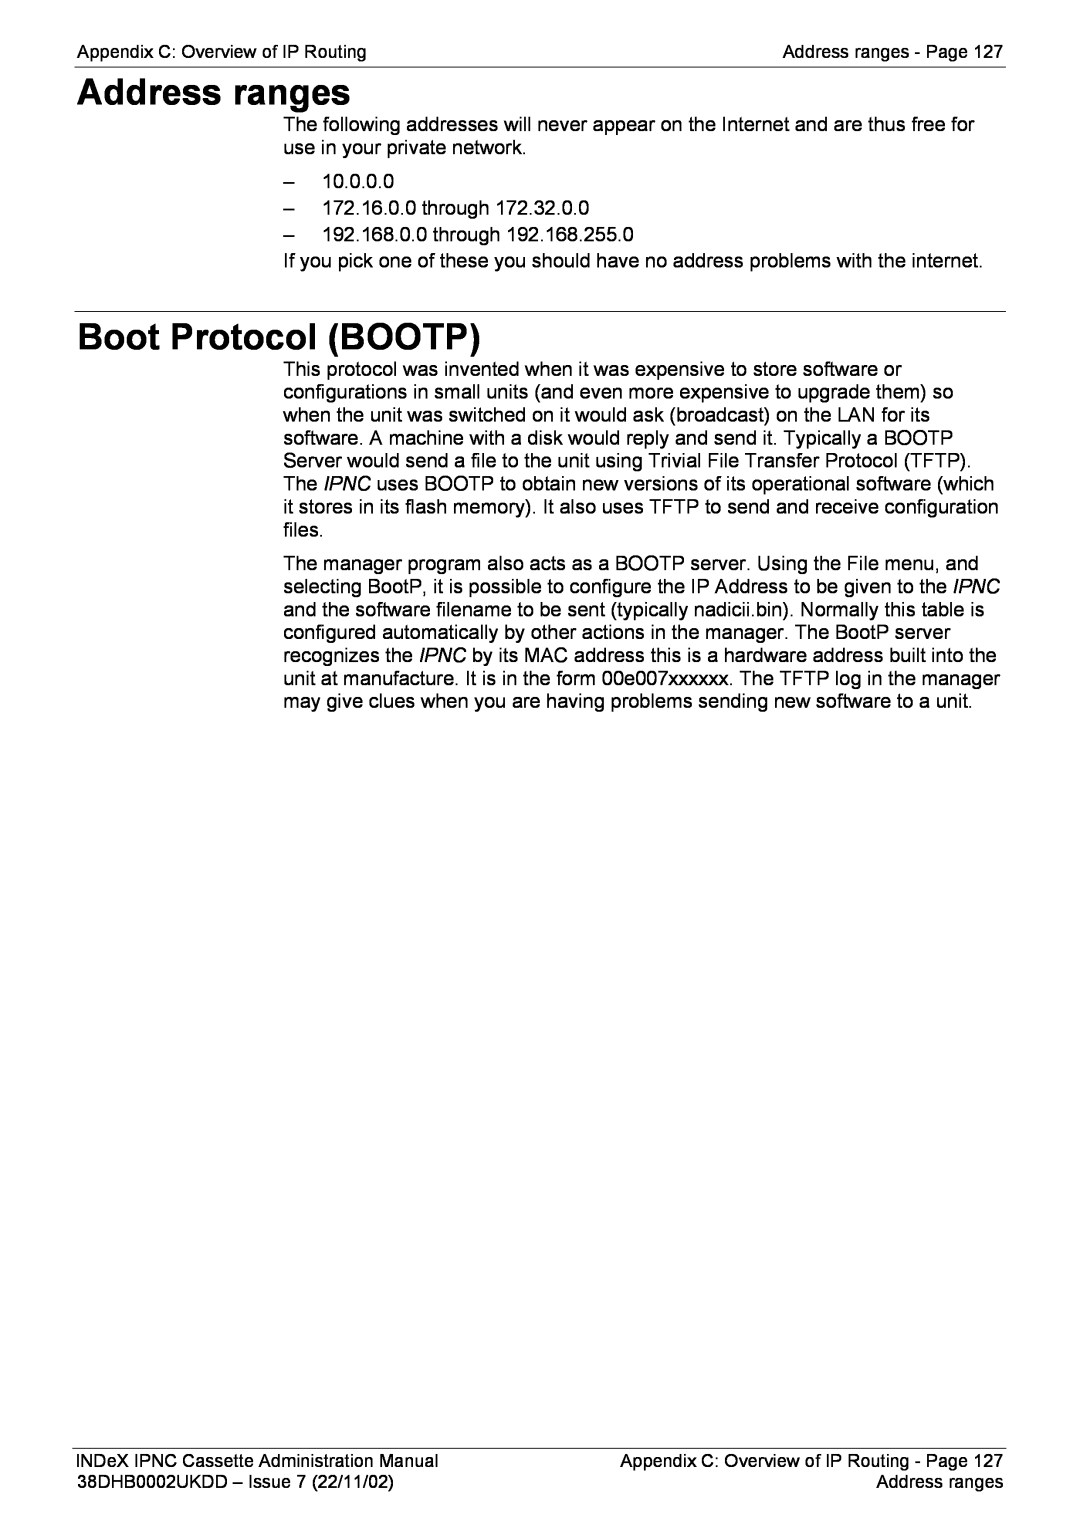 Avaya 38DHB0002UKDD manual Address ranges, Boot Protocol BOOTP 